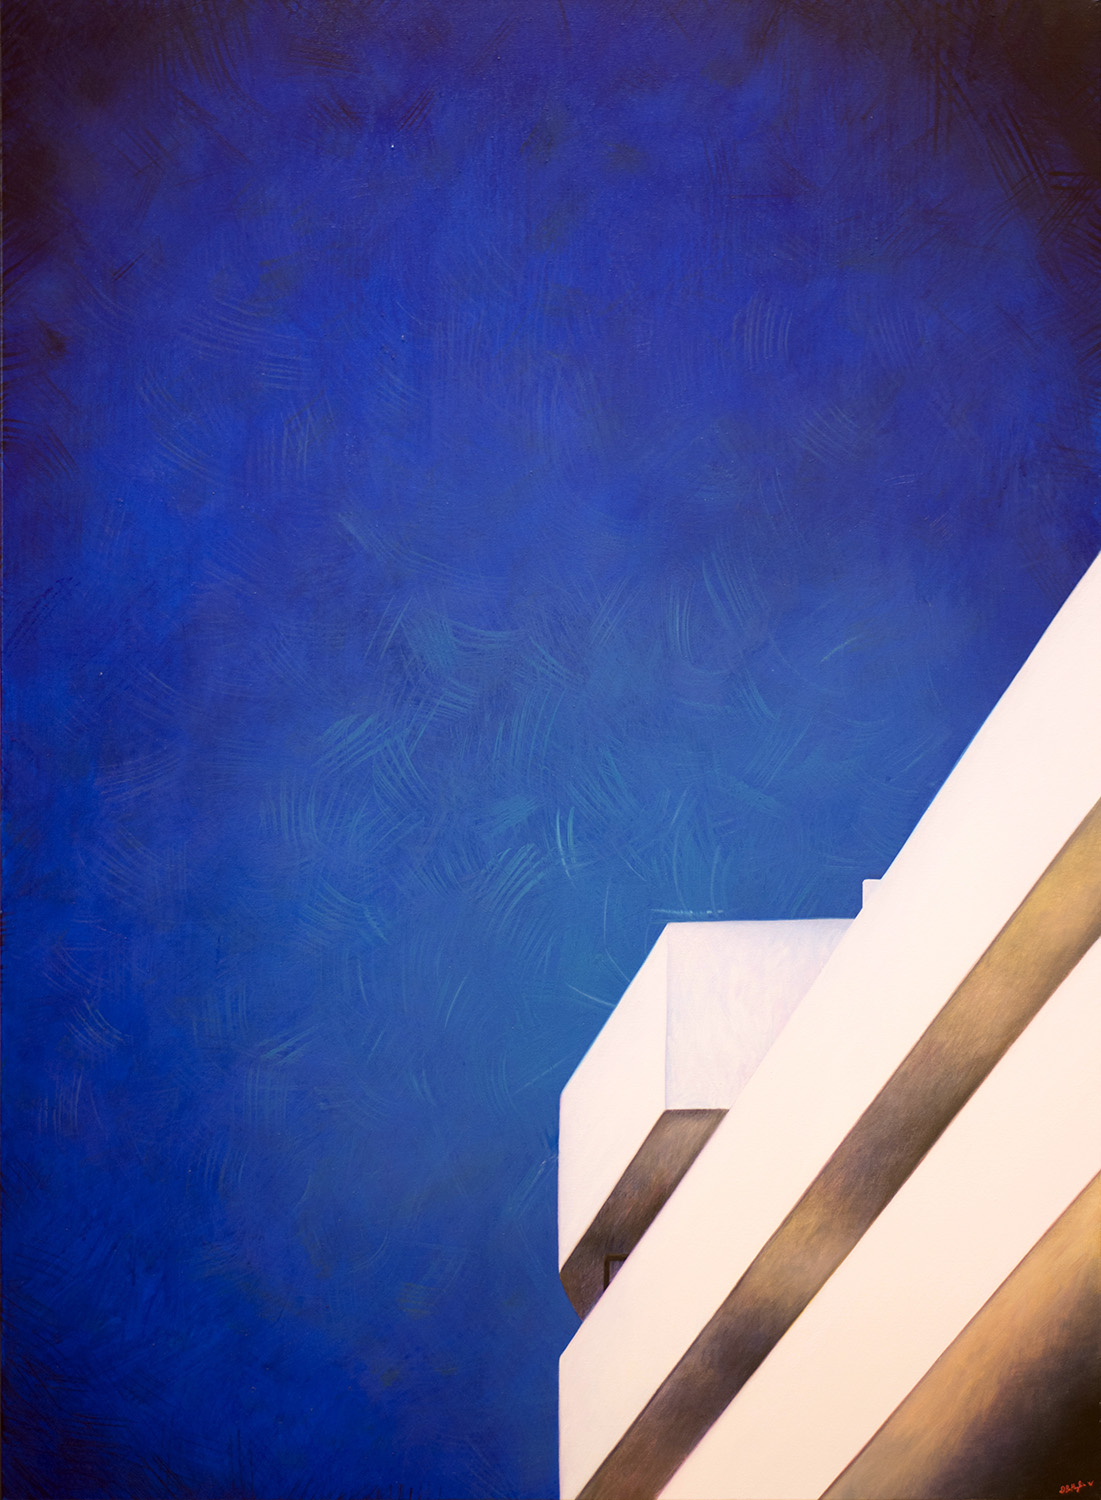 
'Blue Interlude'
(2016)
oil on canvas,
100x73 cm
